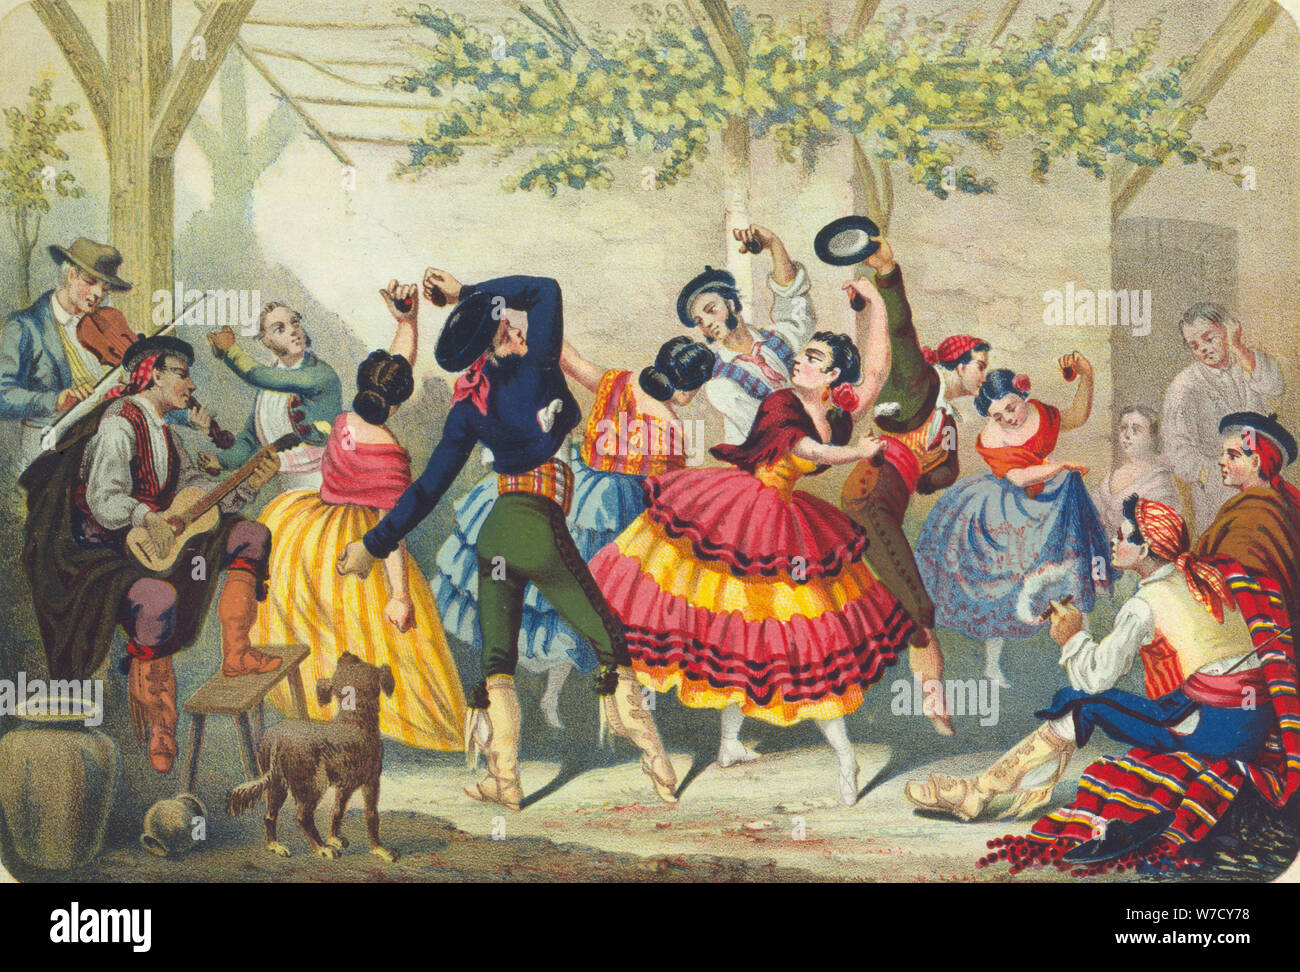 Spanish dancers, mid 19th century. Artist: Anon Stock Photo